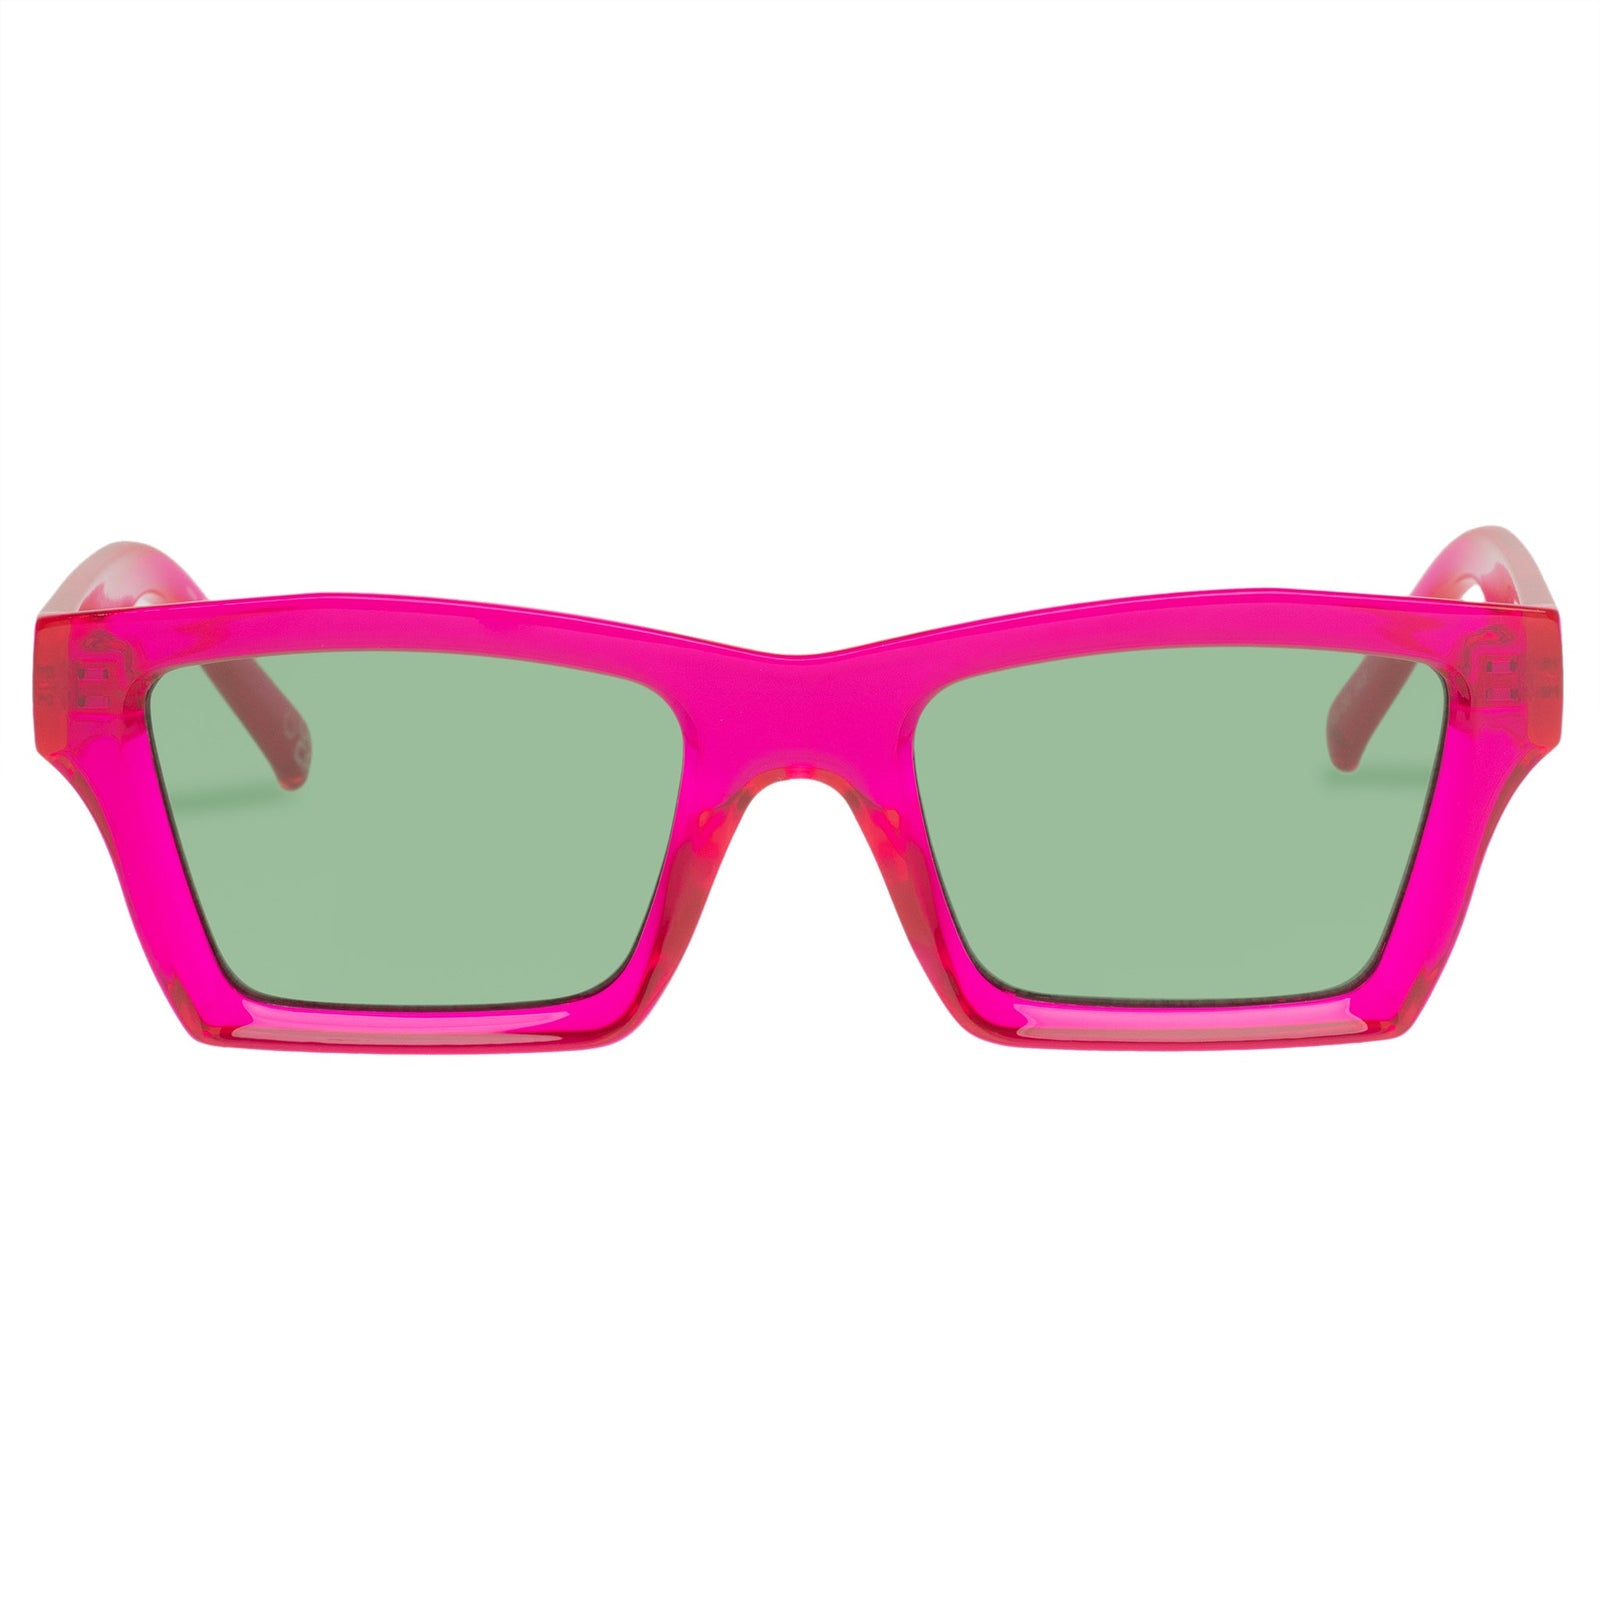 Le Specs - Something, D-Frame Sunglasses, Hyper Pink, Medium